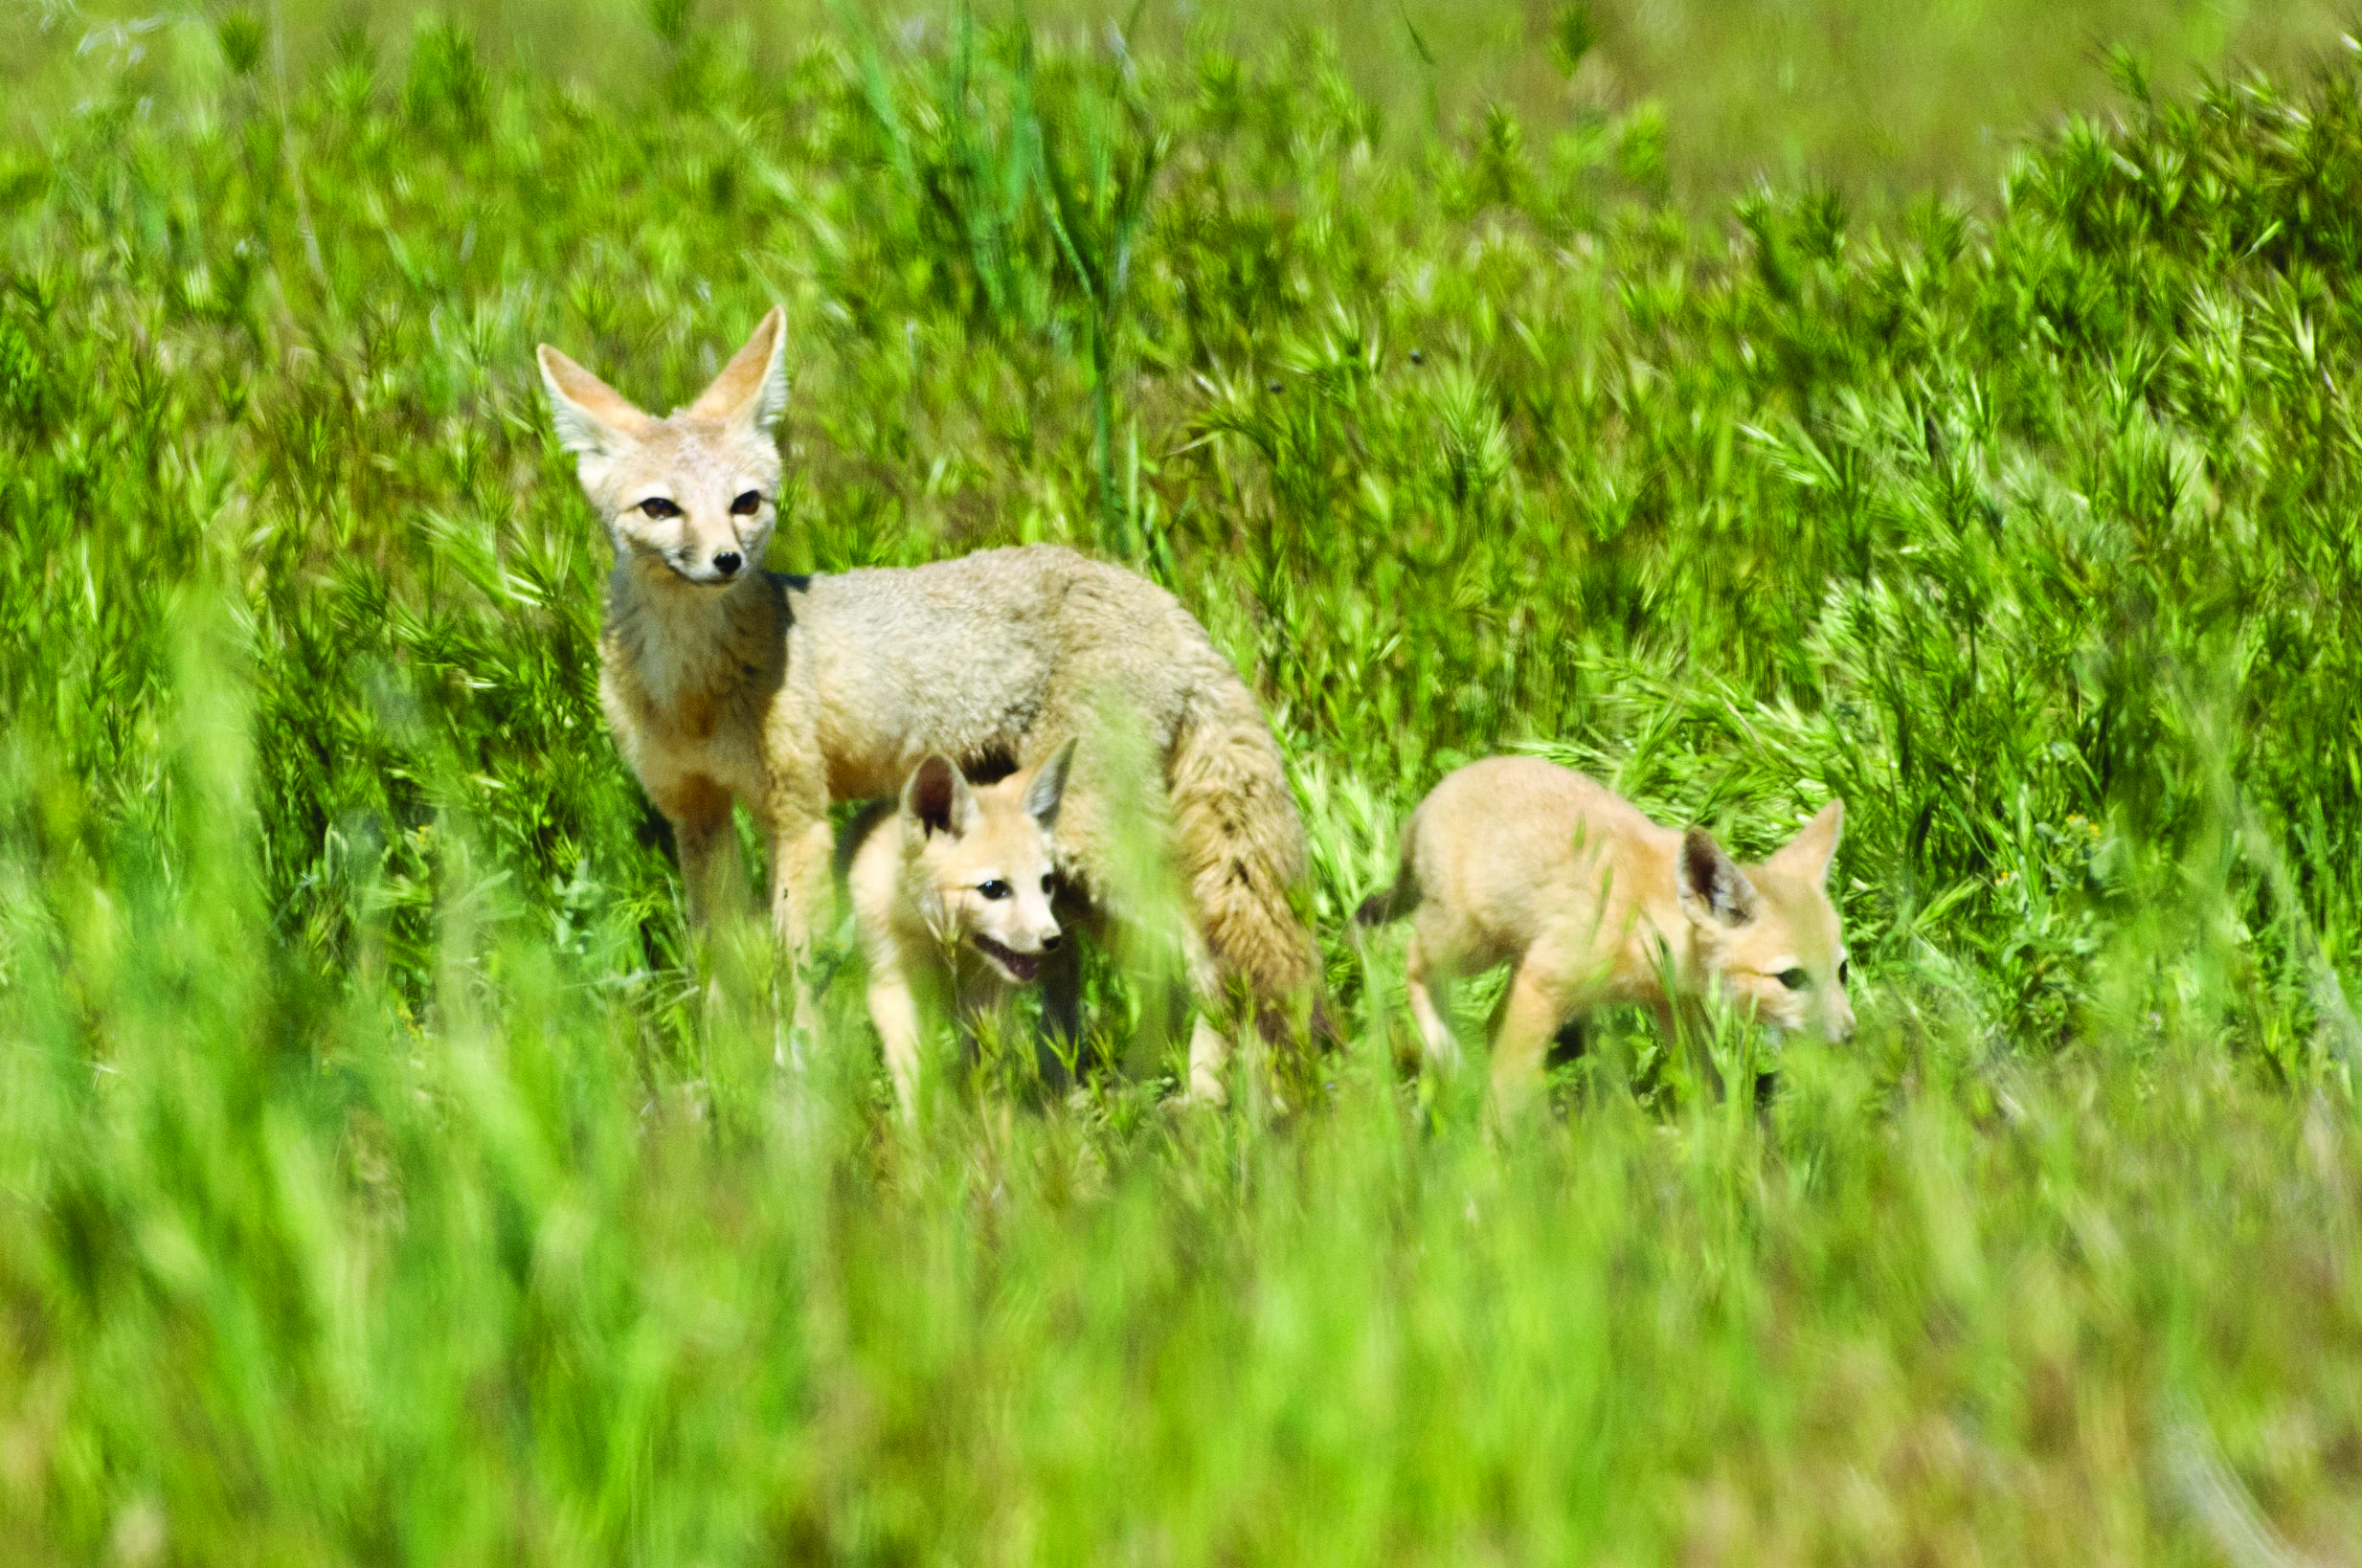 San Joaquin kit fox with kits in grass